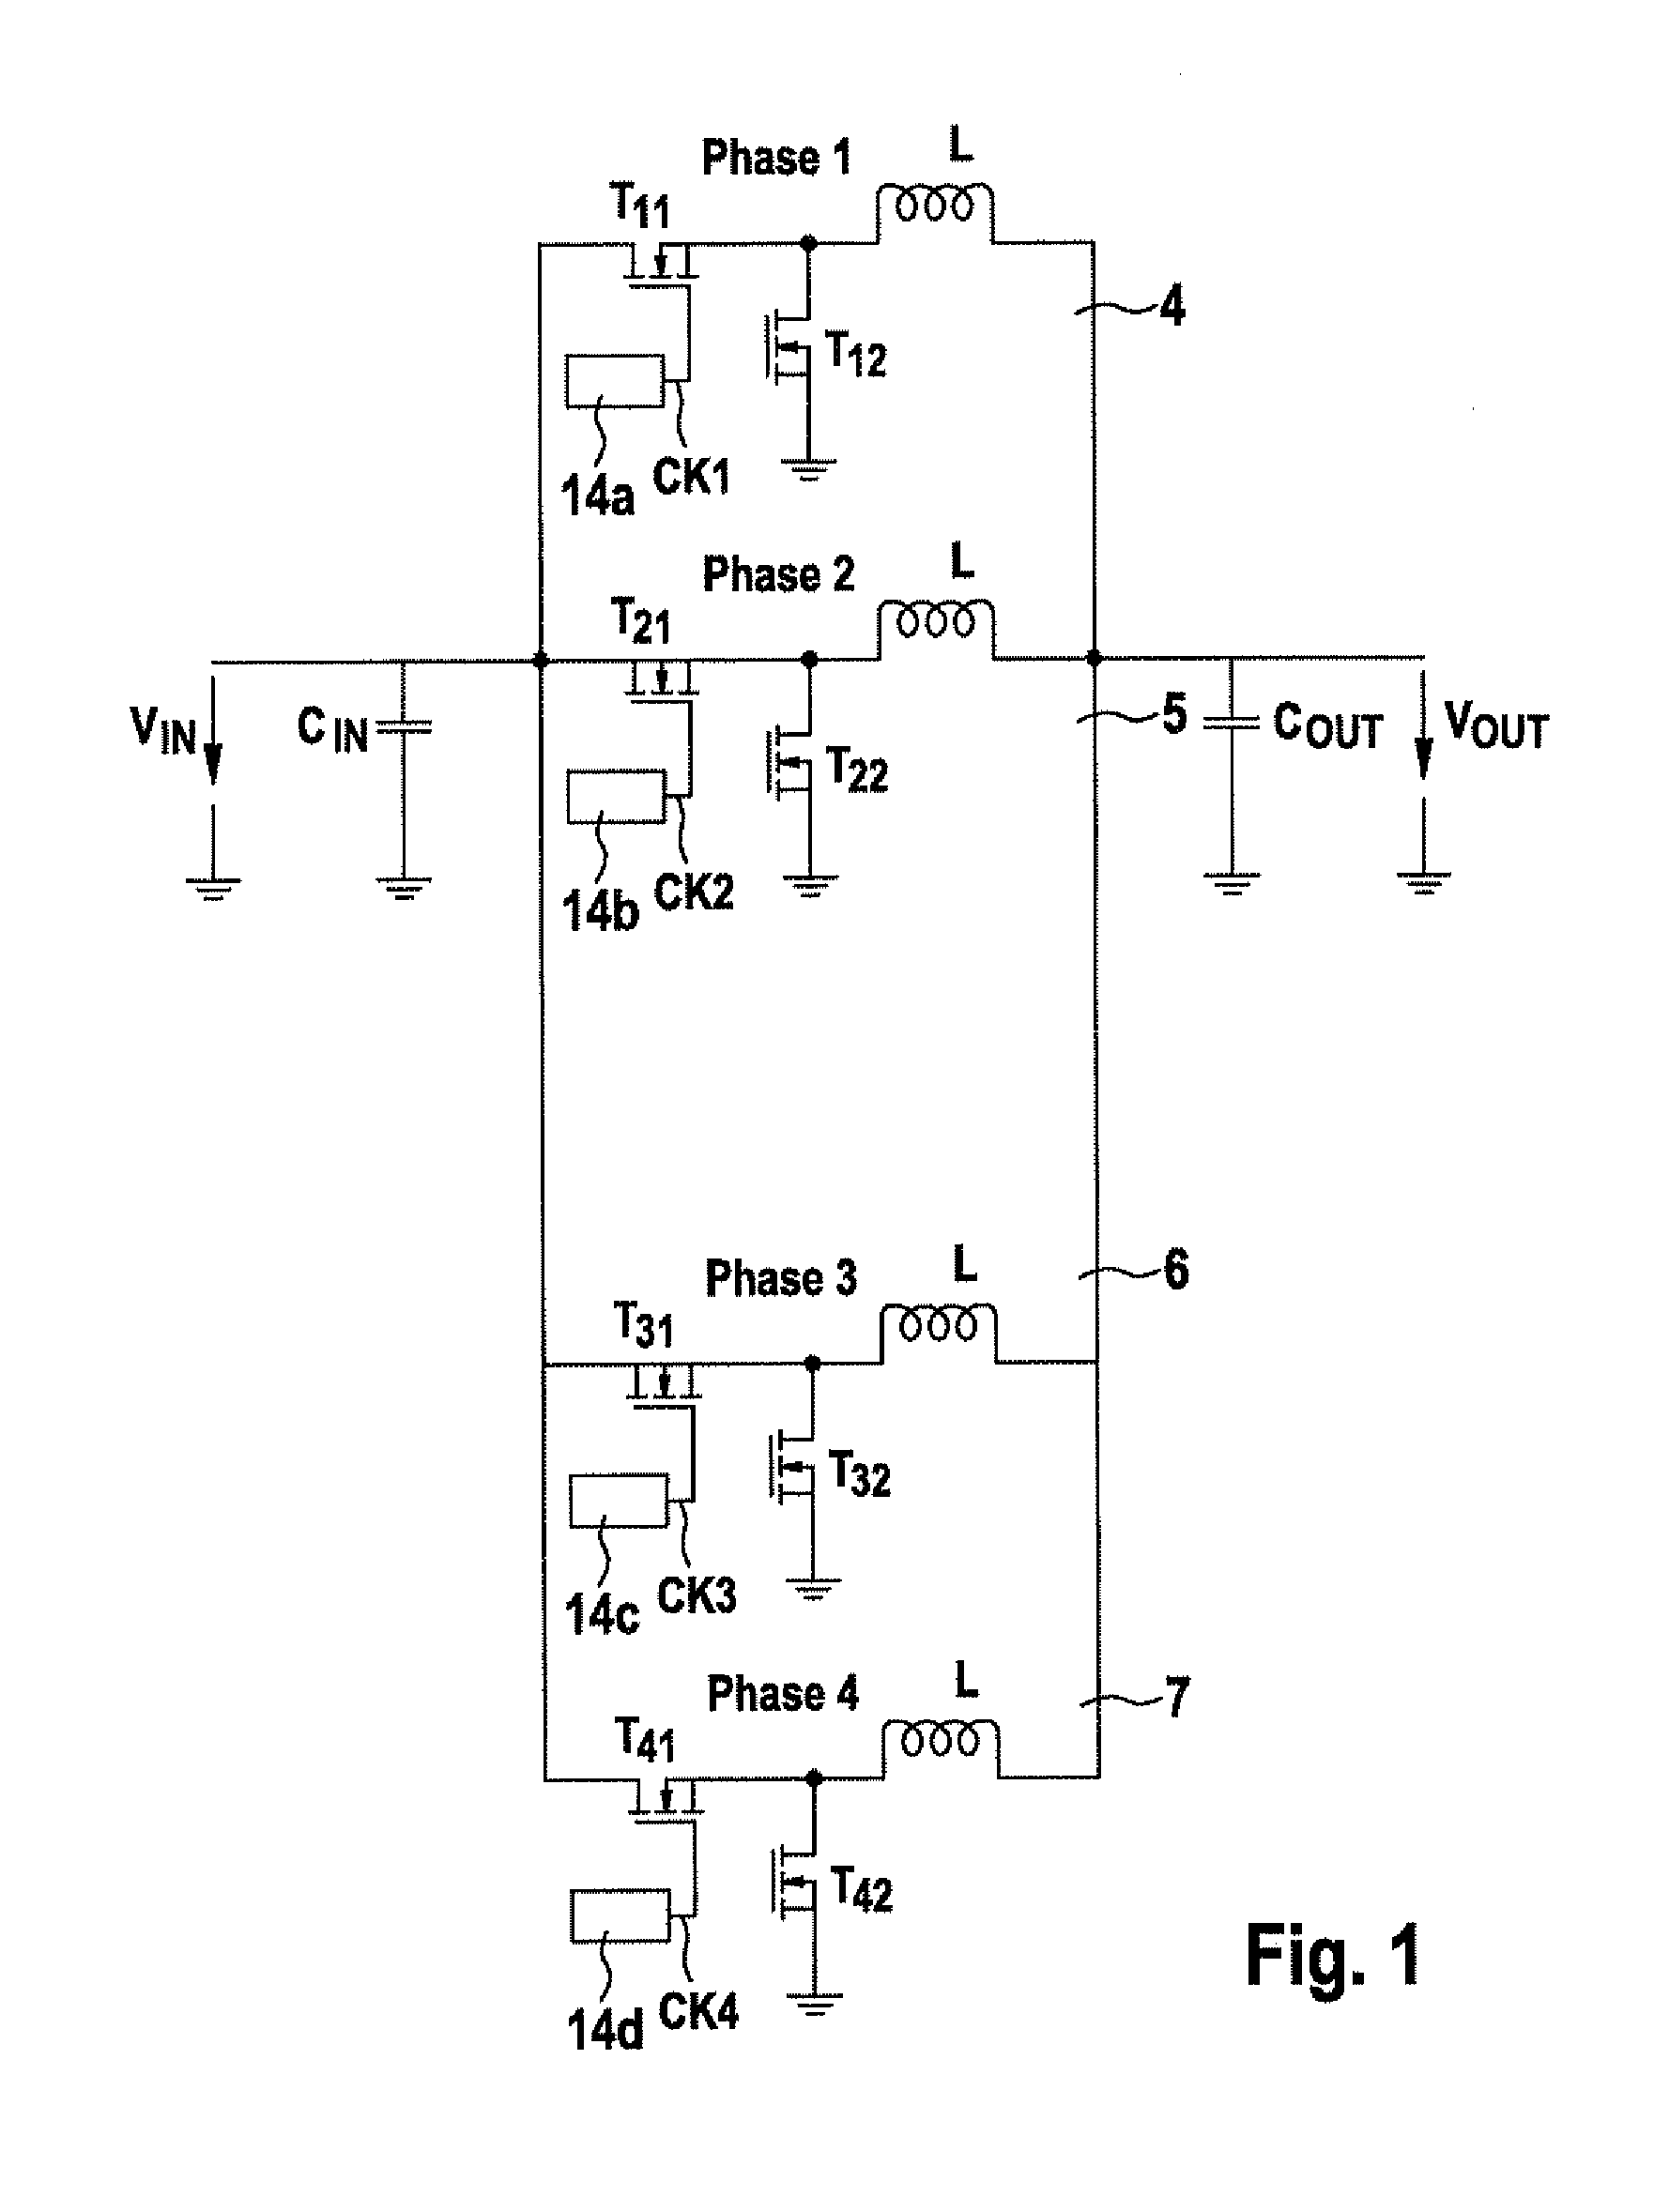 Multiphase DC to DC voltage converter